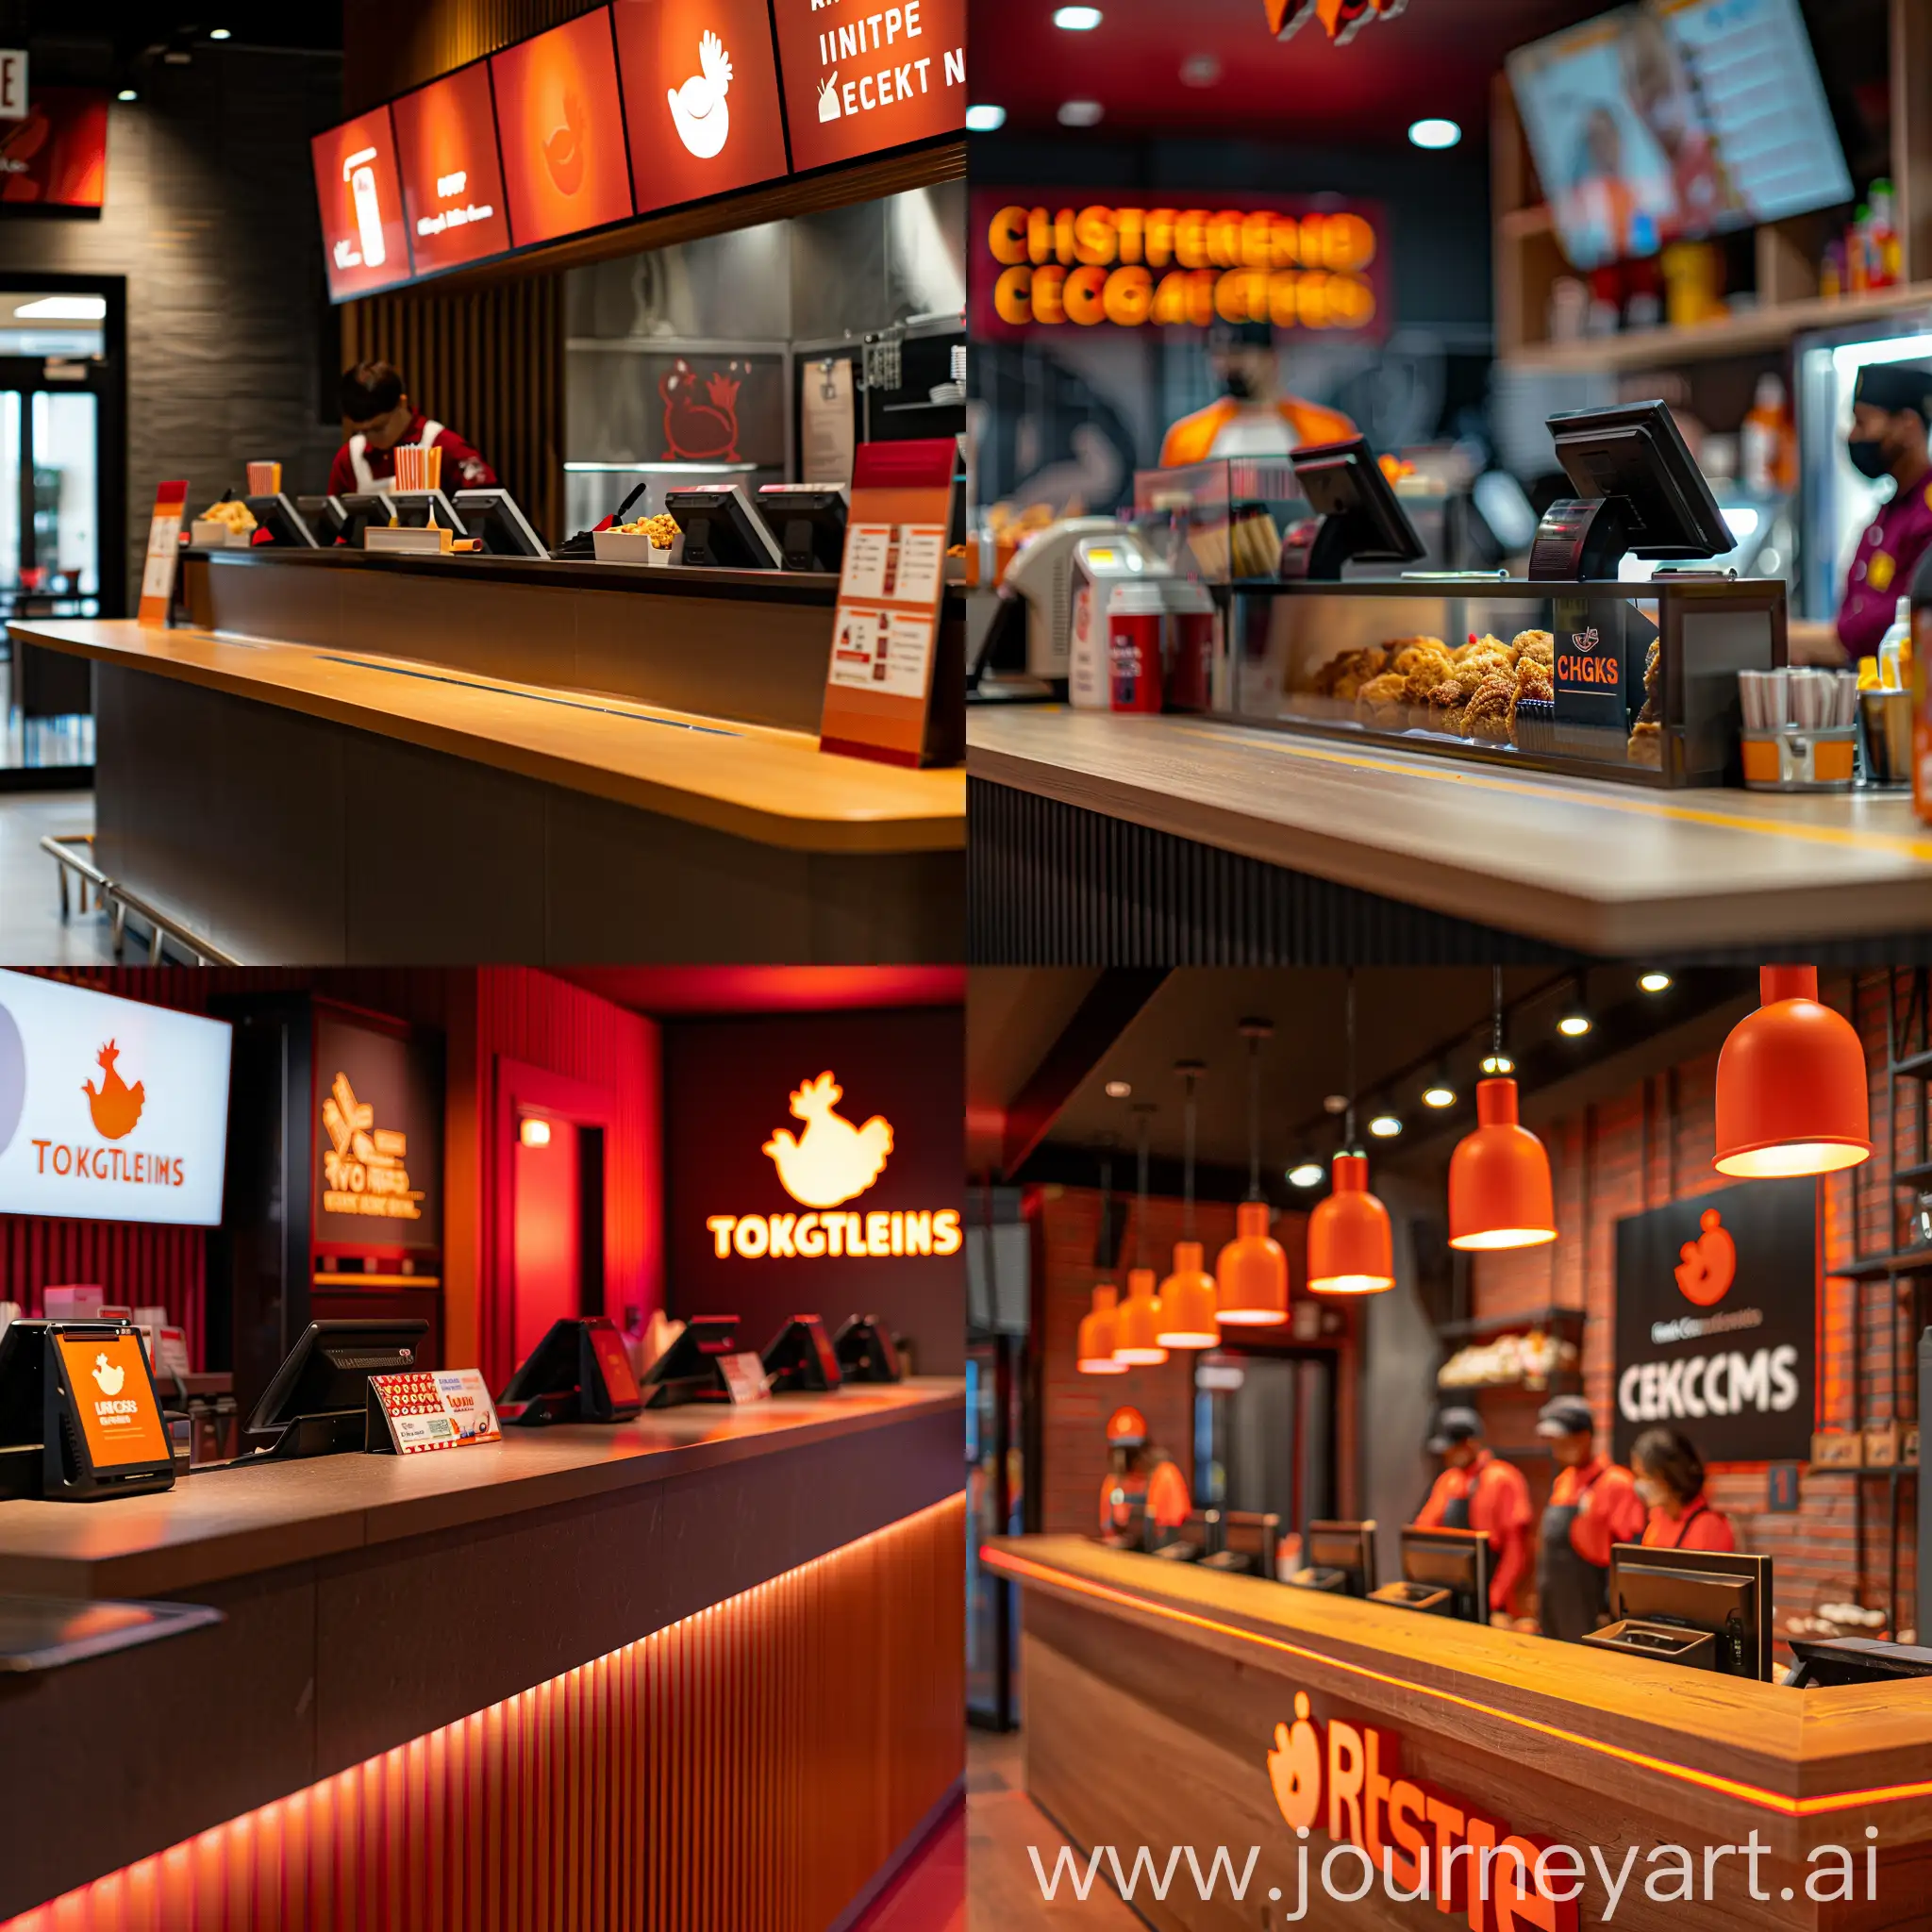 chicken restaurant cashier desk and stuff welcome, uniform color dark red and orange, logo mockup close view display